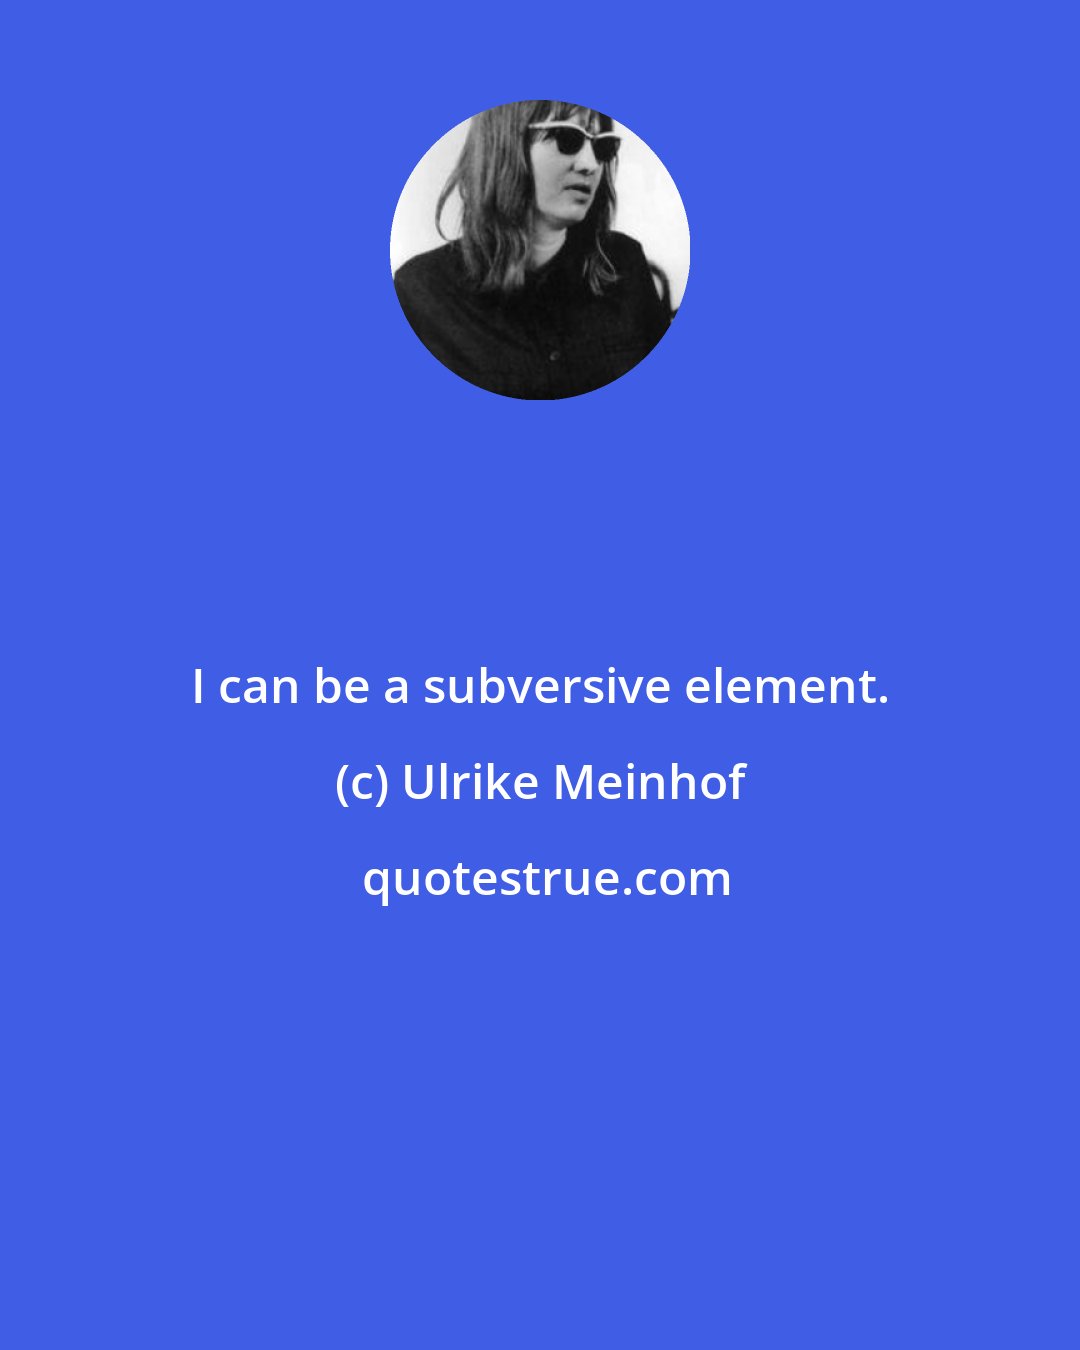 Ulrike Meinhof: I can be a subversive element.